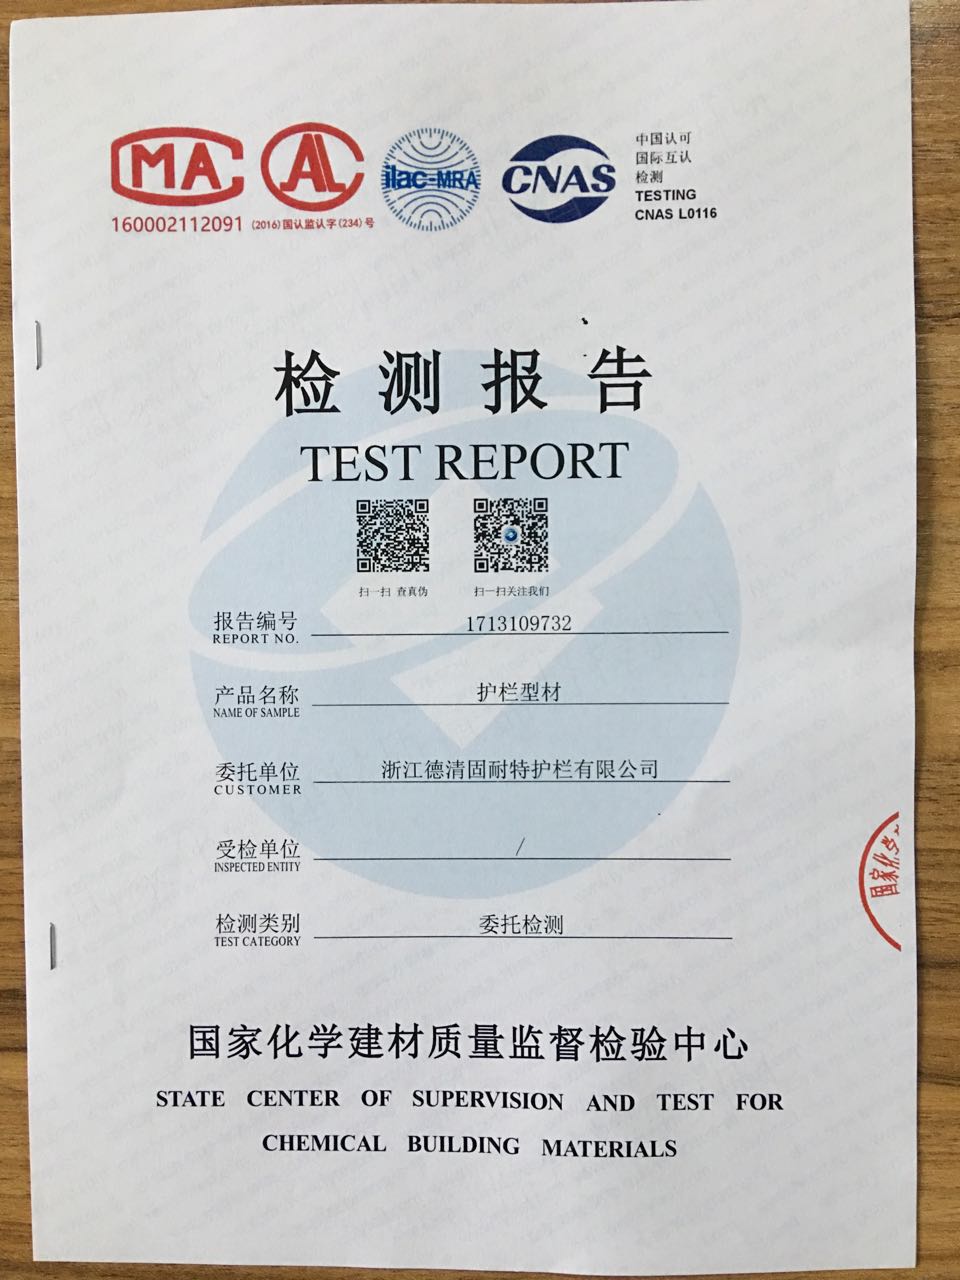 TEST REPORT